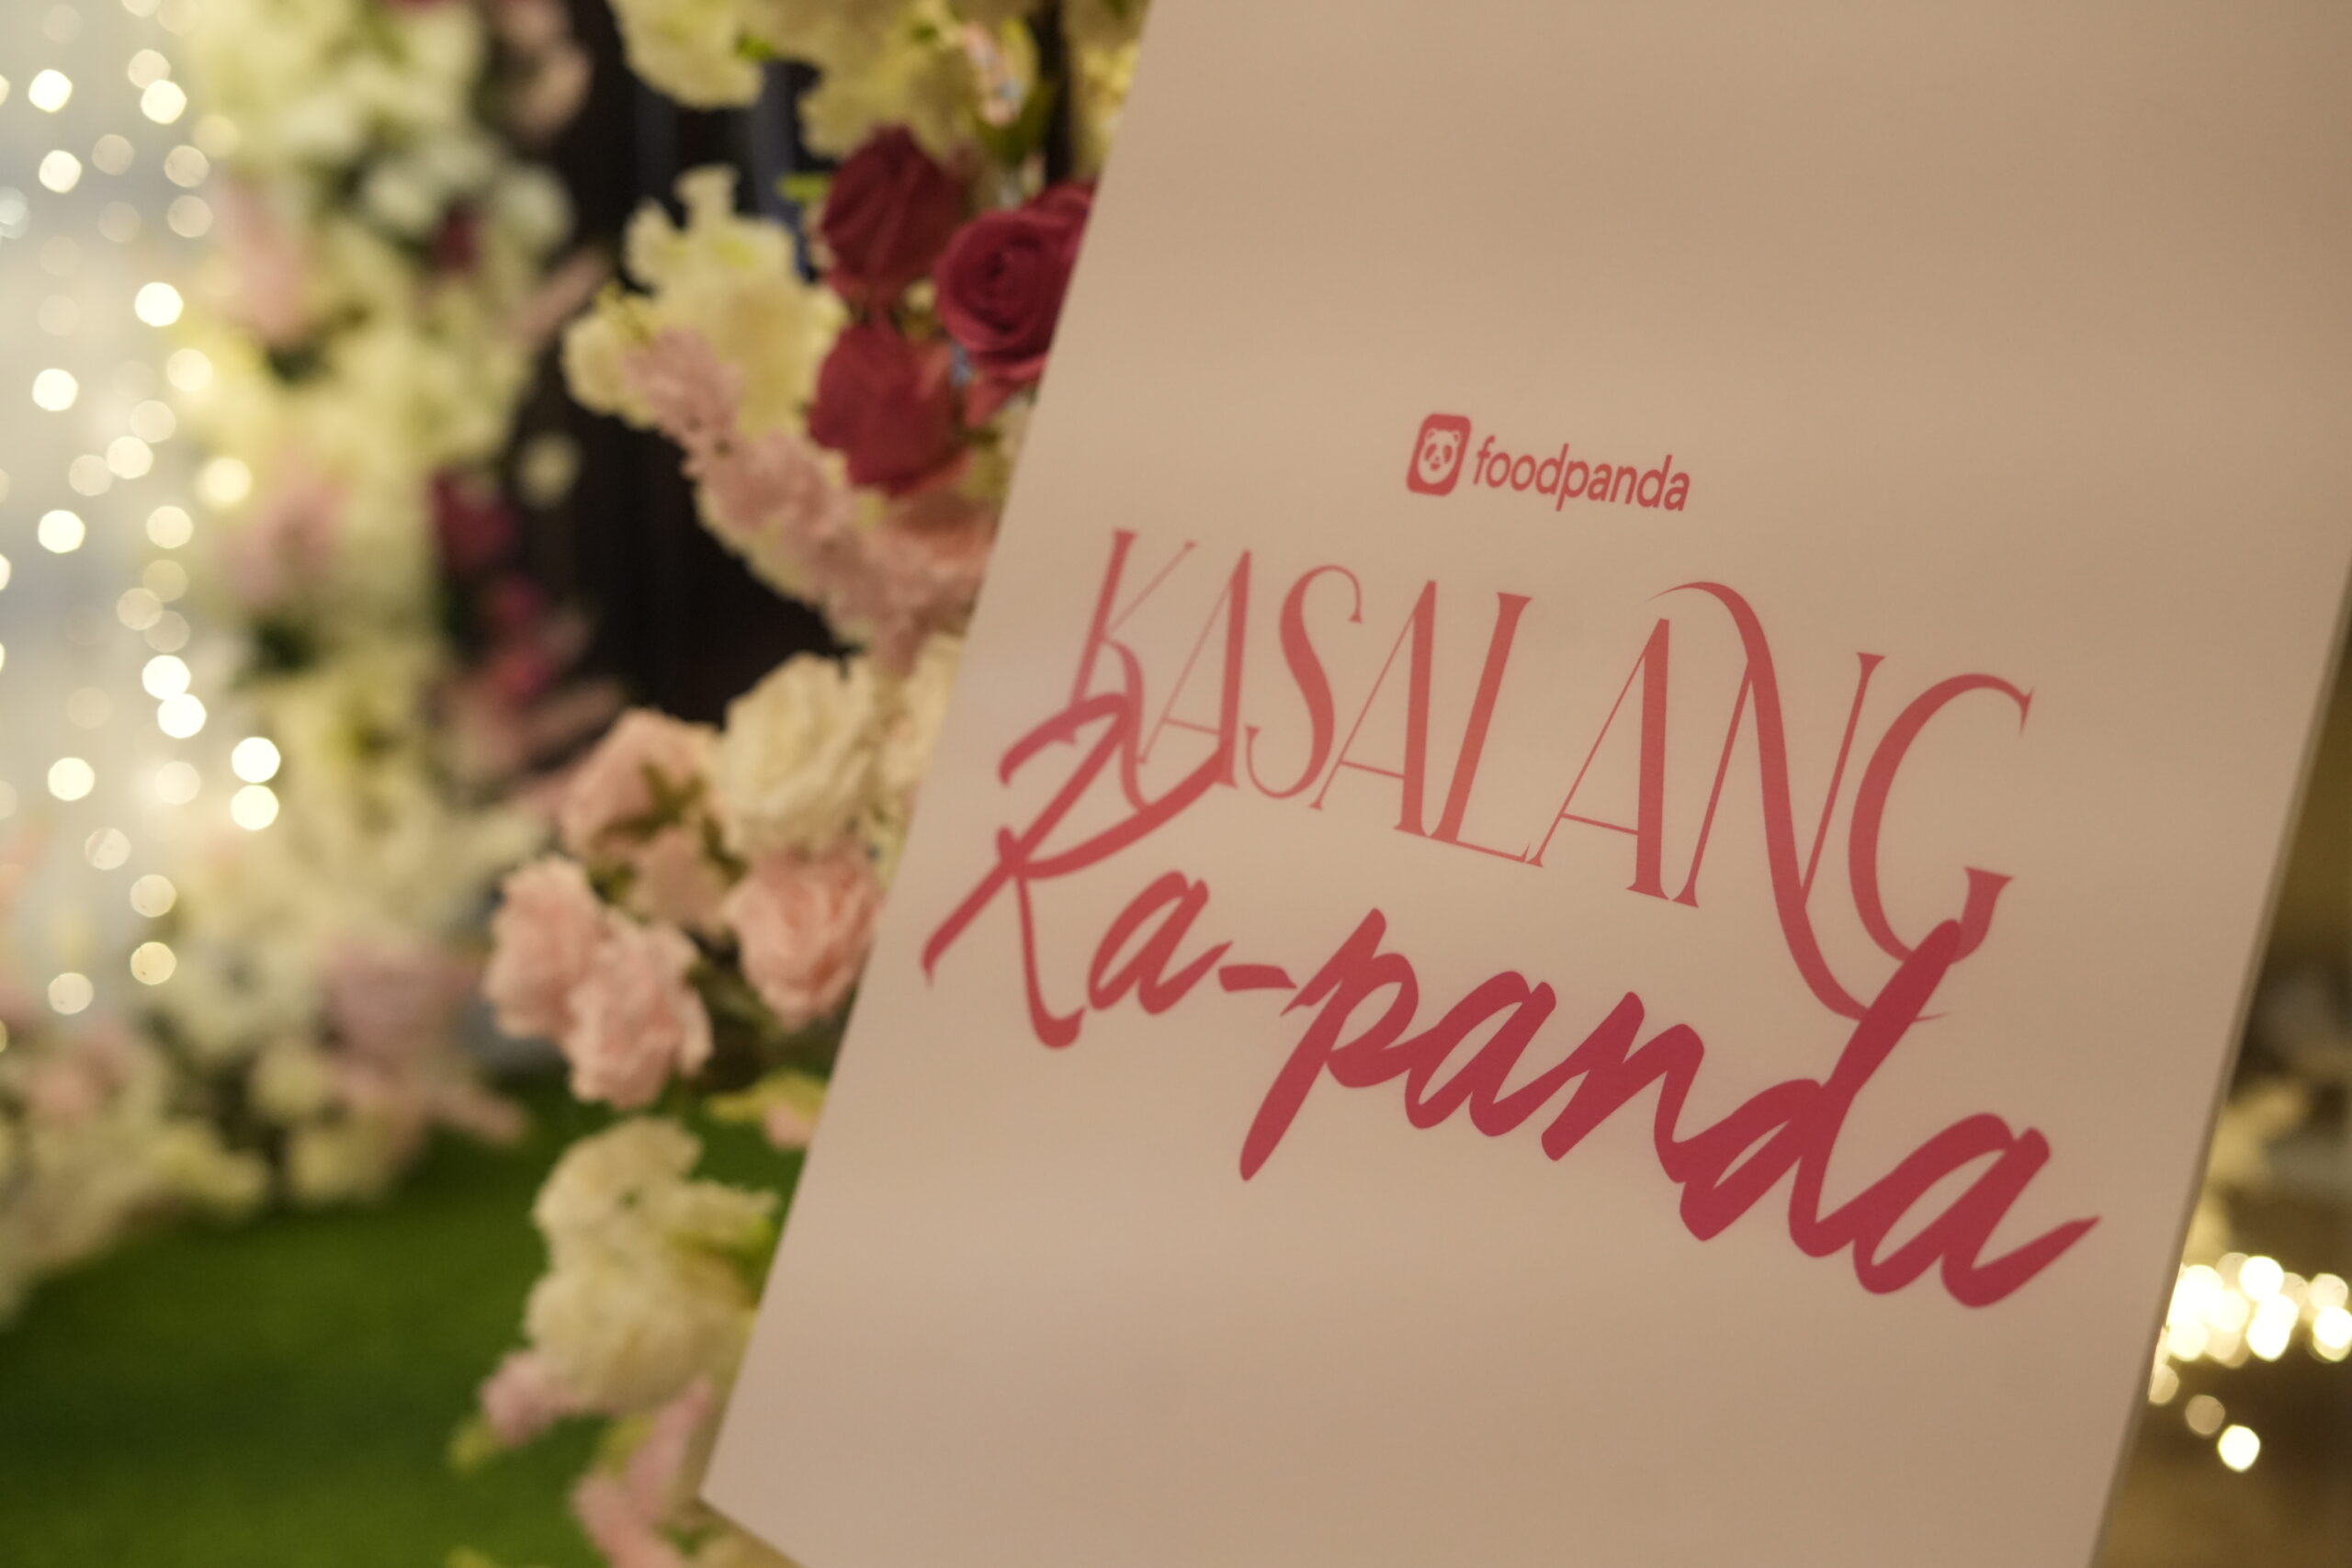 foodpanda logistics organizes delivery partners’ dream weddings